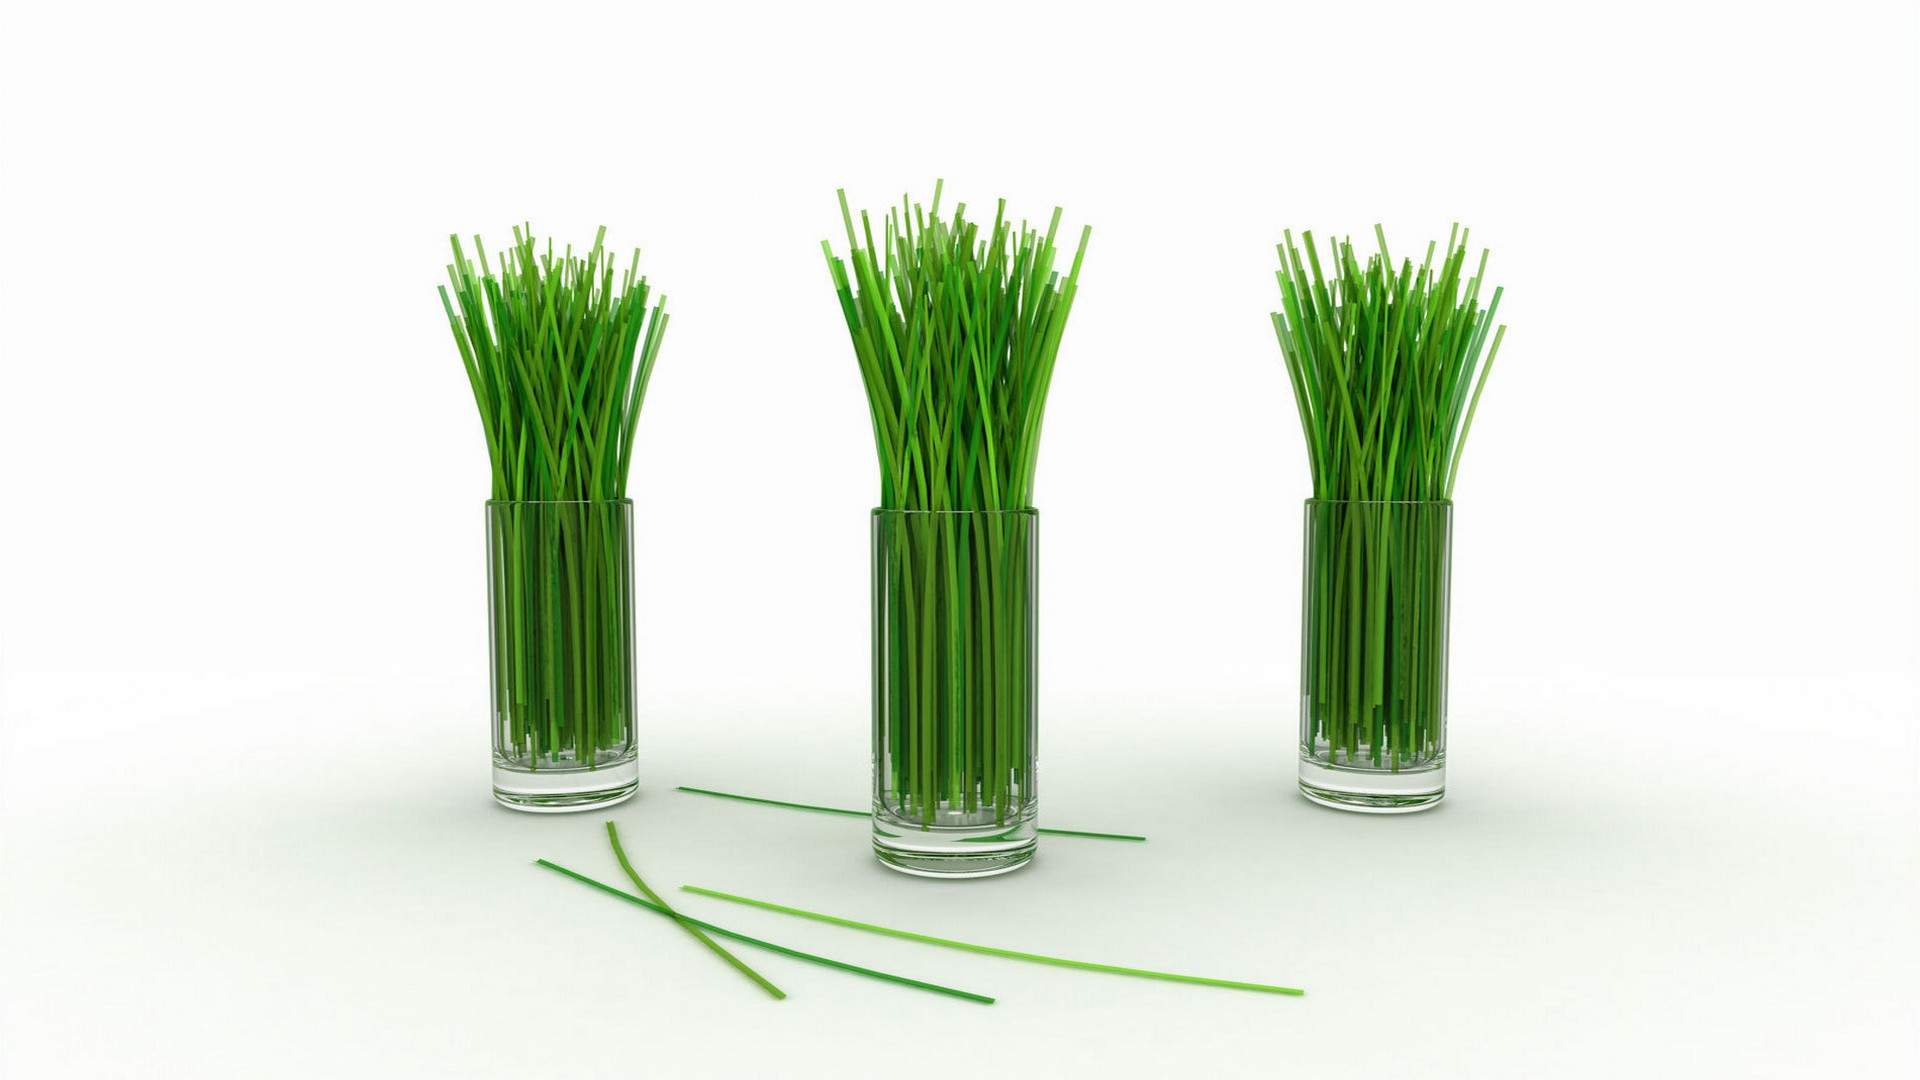 minimalism, lemon grass, glasses, white background, минимализм, лимонная трава, стаканы, белый фон